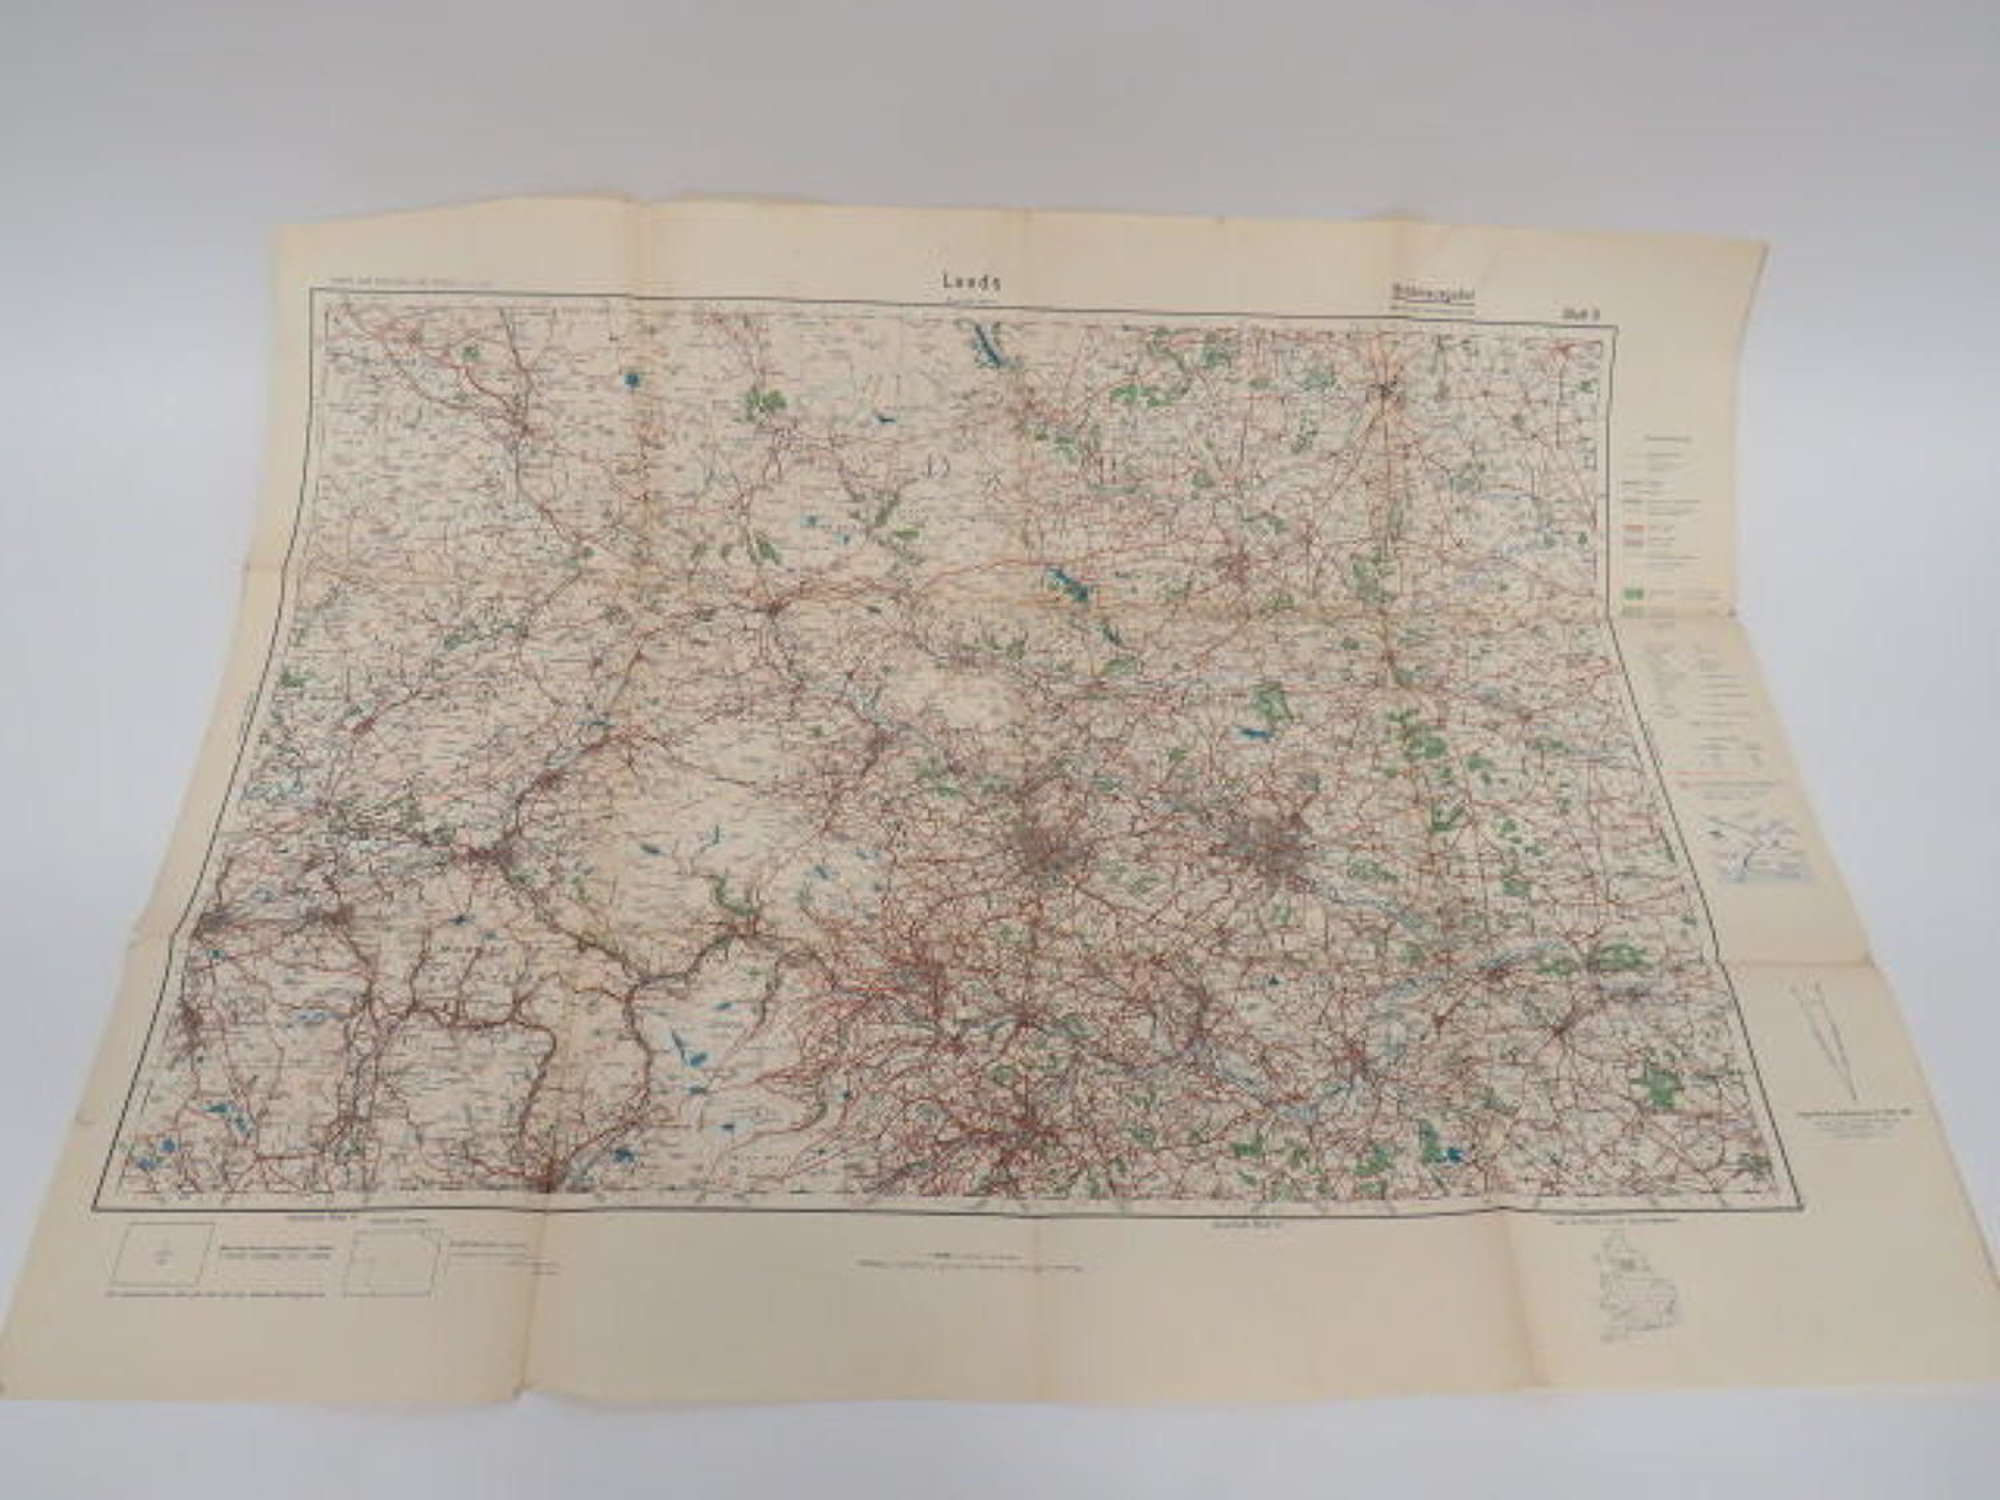 WW 2 German Invasion Map of Leeds